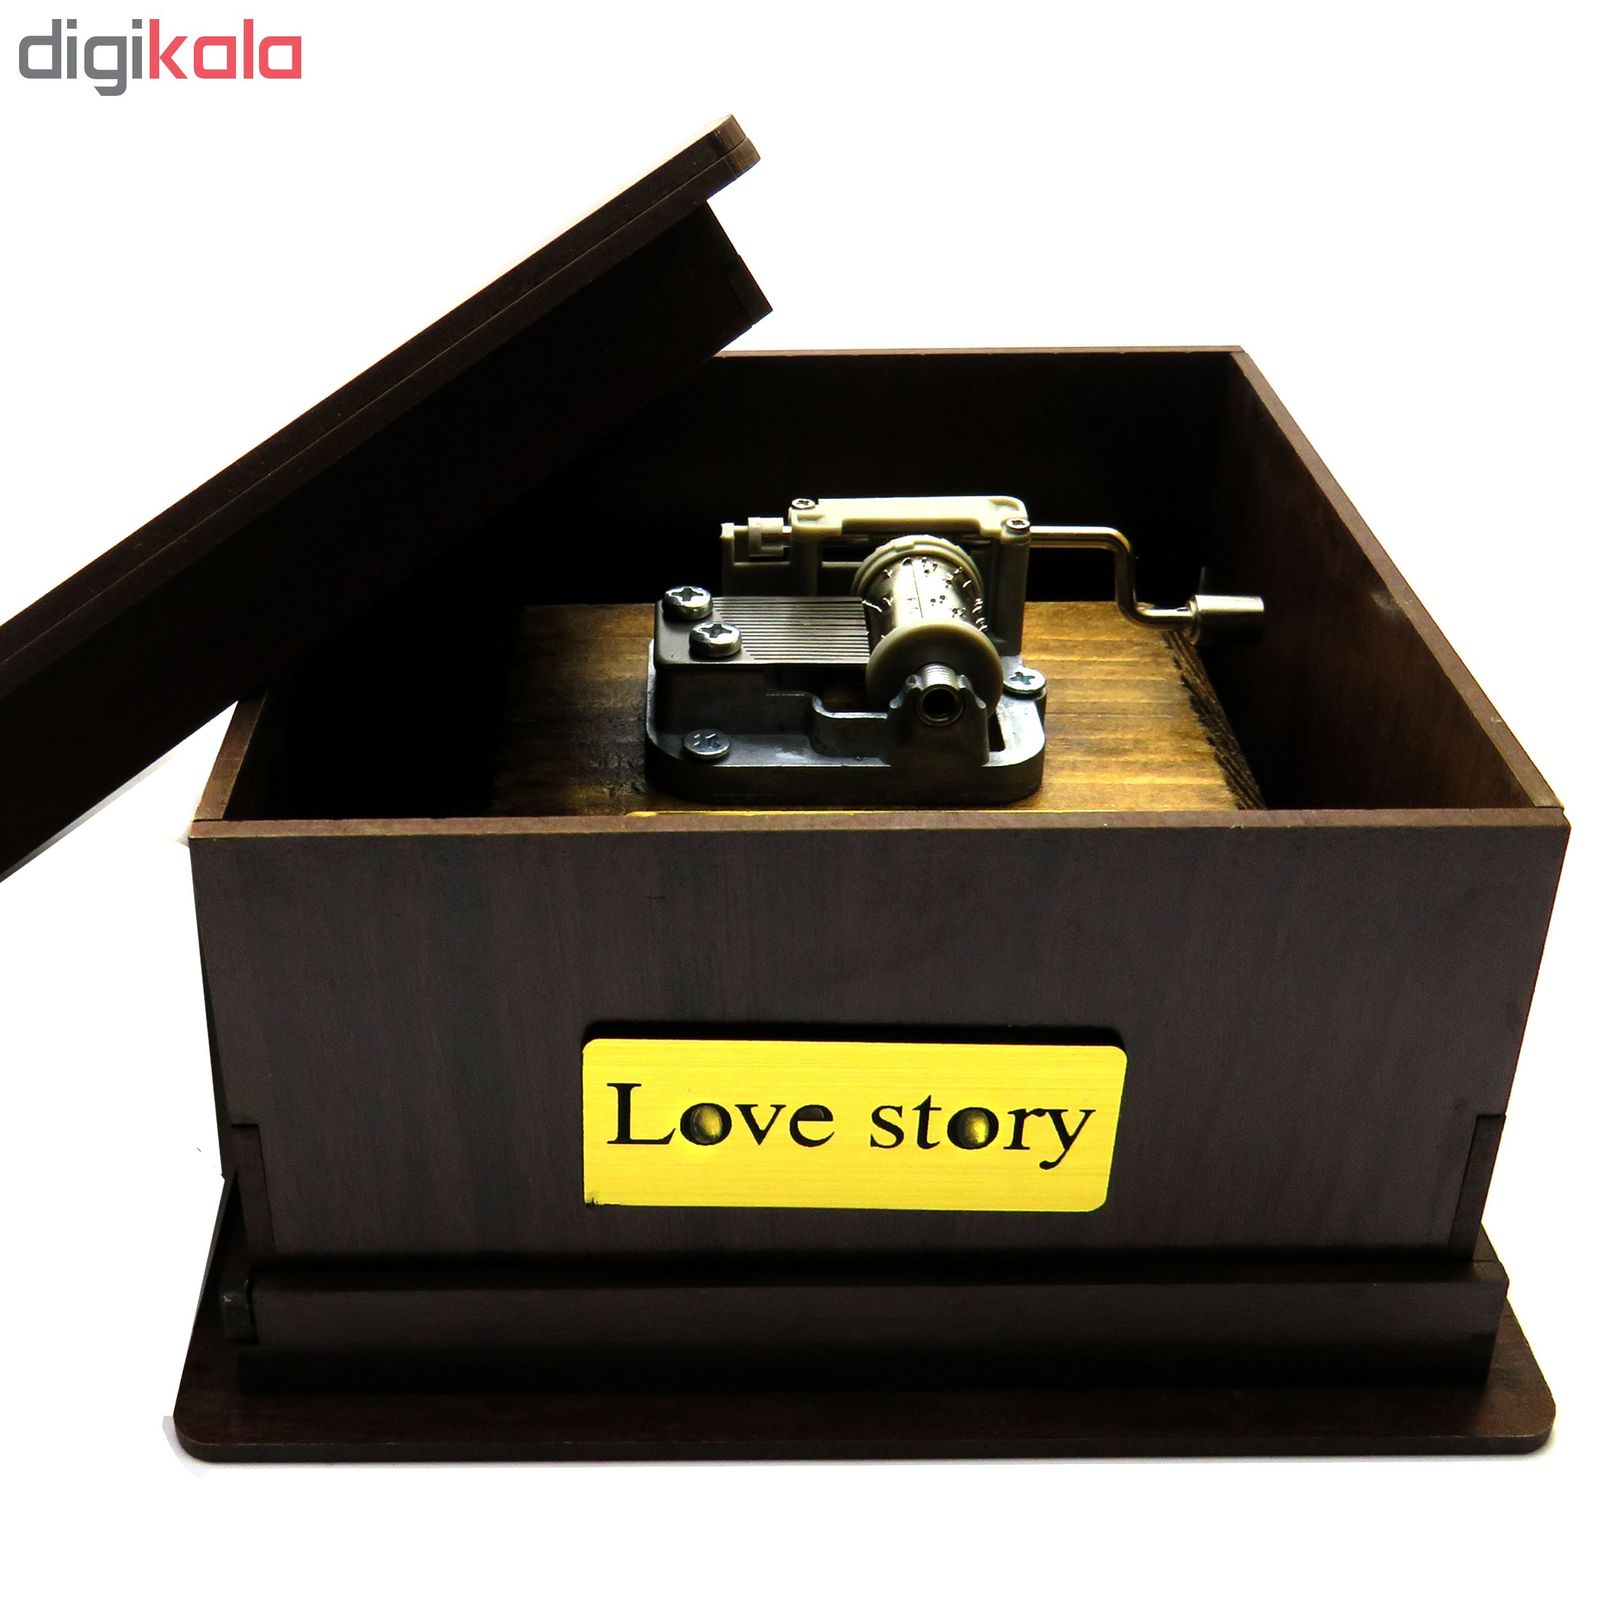 جعبه موزیکالایل تمپو فلیچیتا مدل LOVE STORY